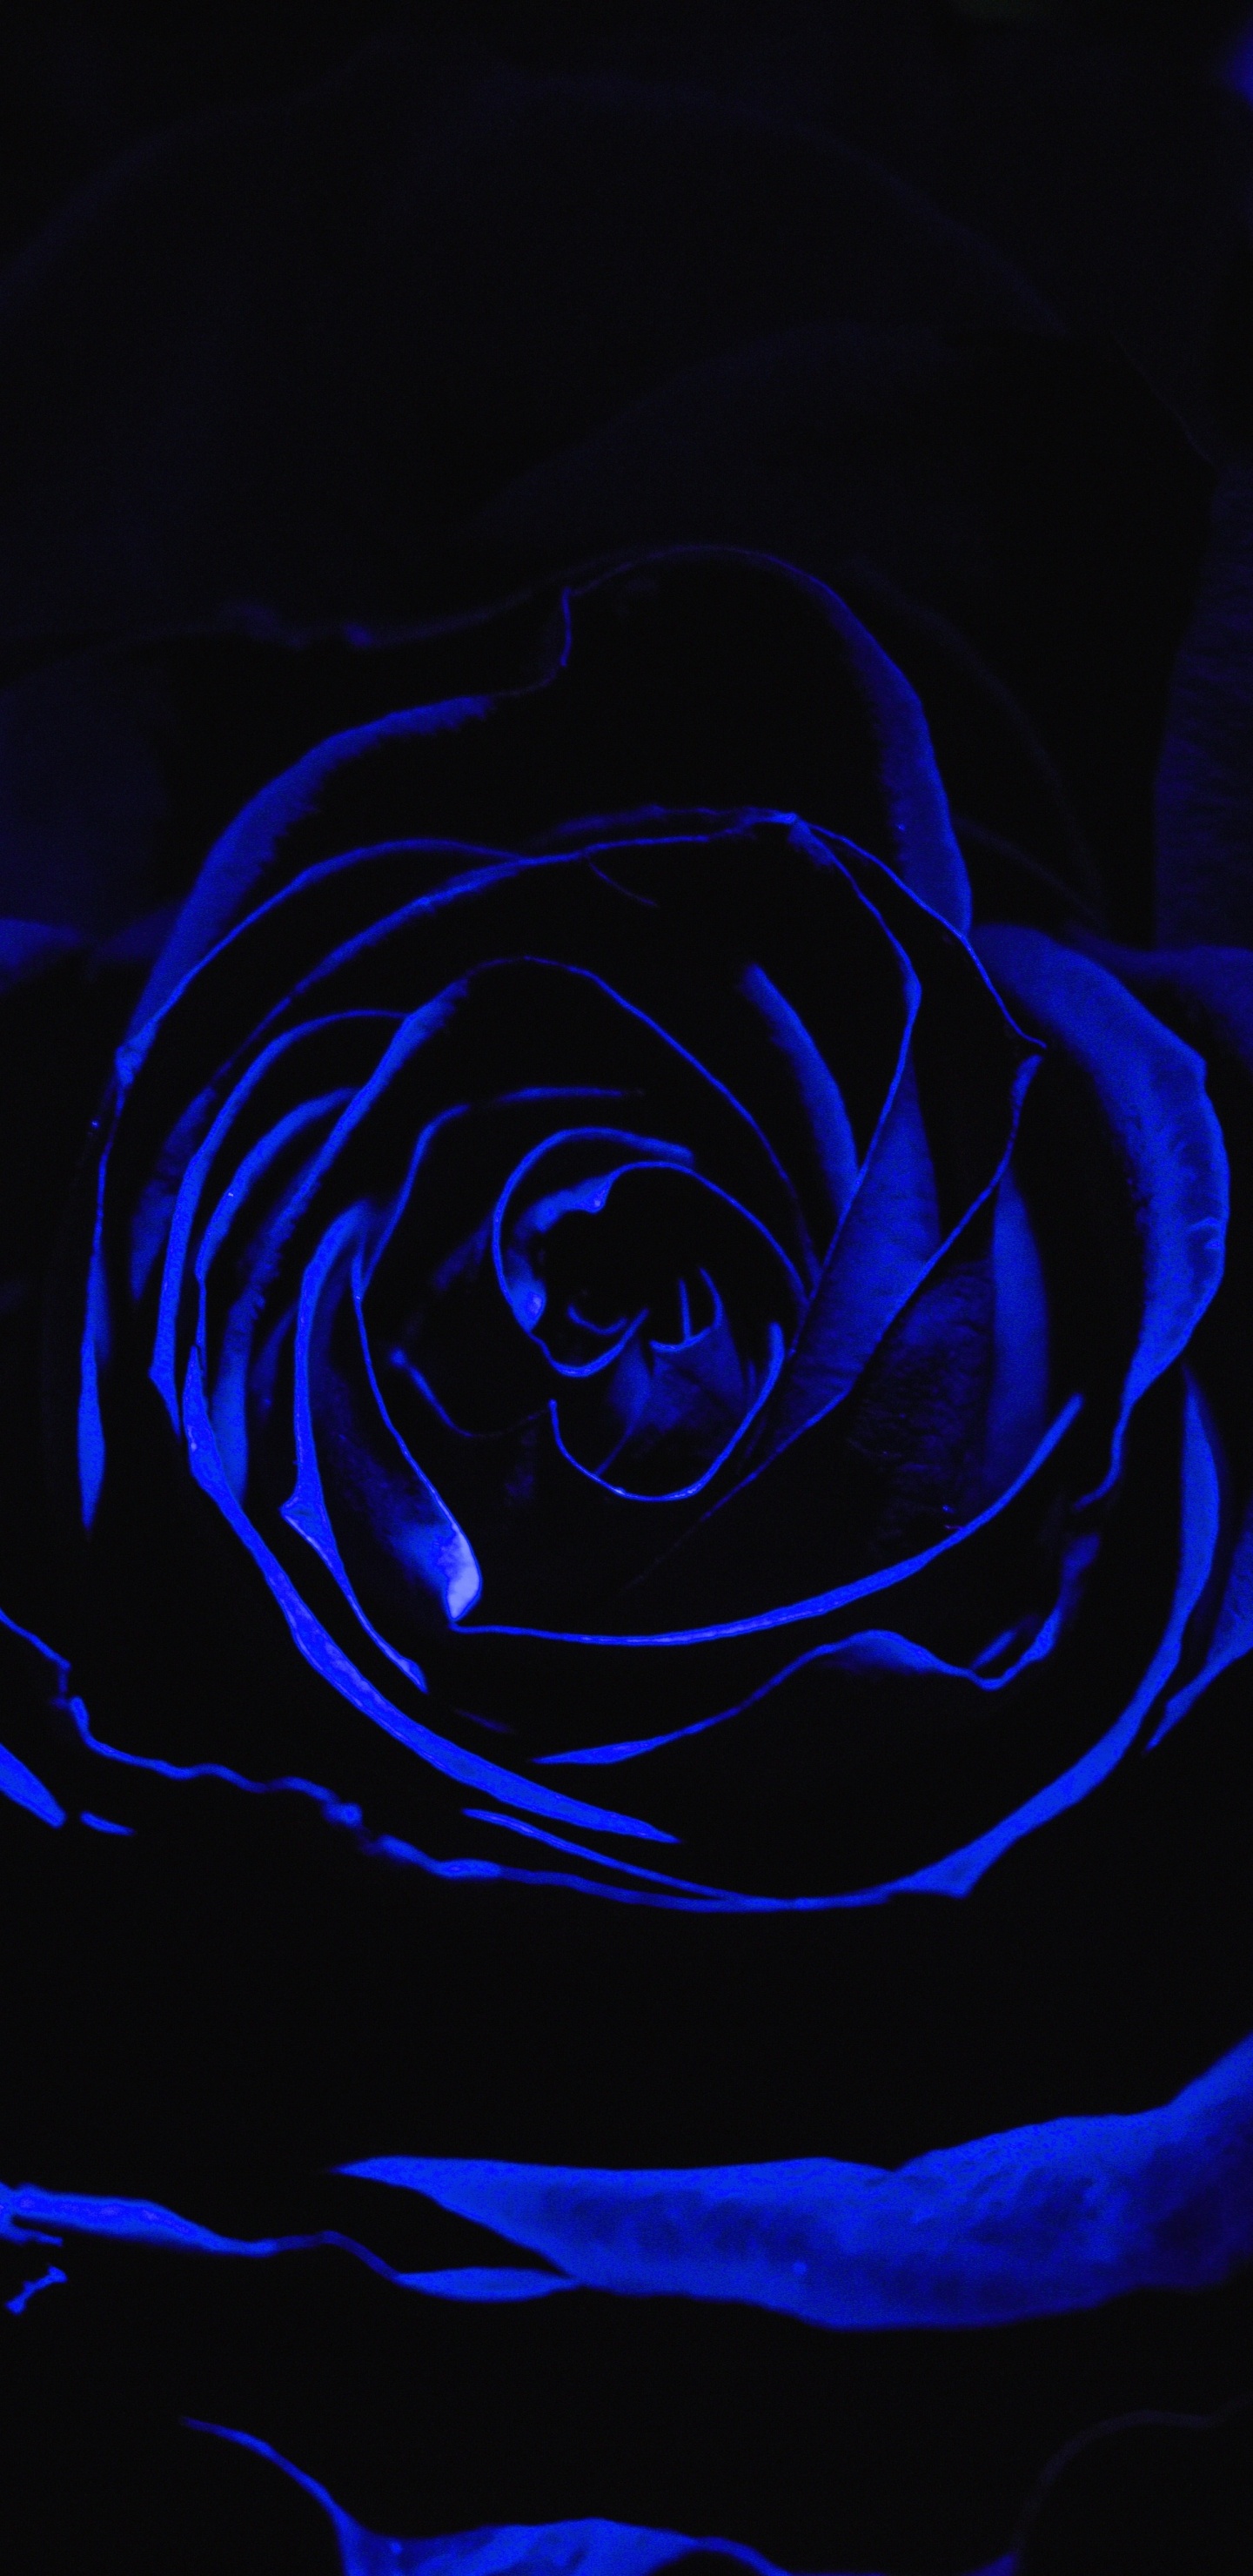 Blaue Rose in Nahaufnahmen. Wallpaper in 1440x2960 Resolution